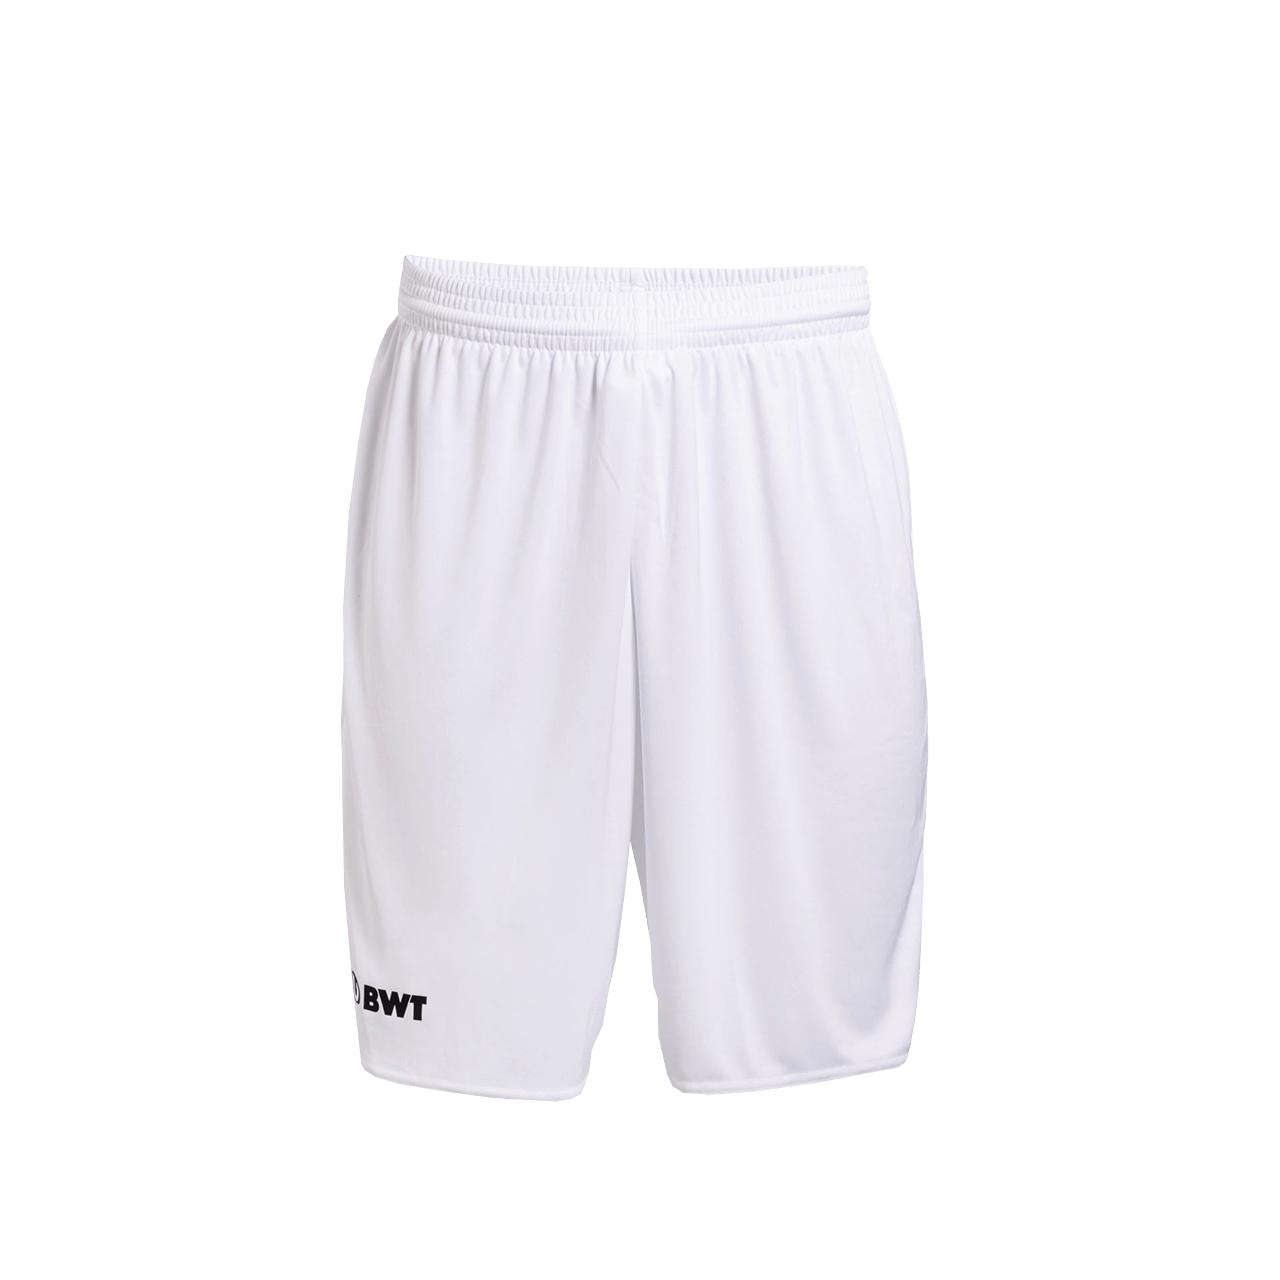 BWT One Training Shorts bianco con logo BWT nero sulla gamba destra